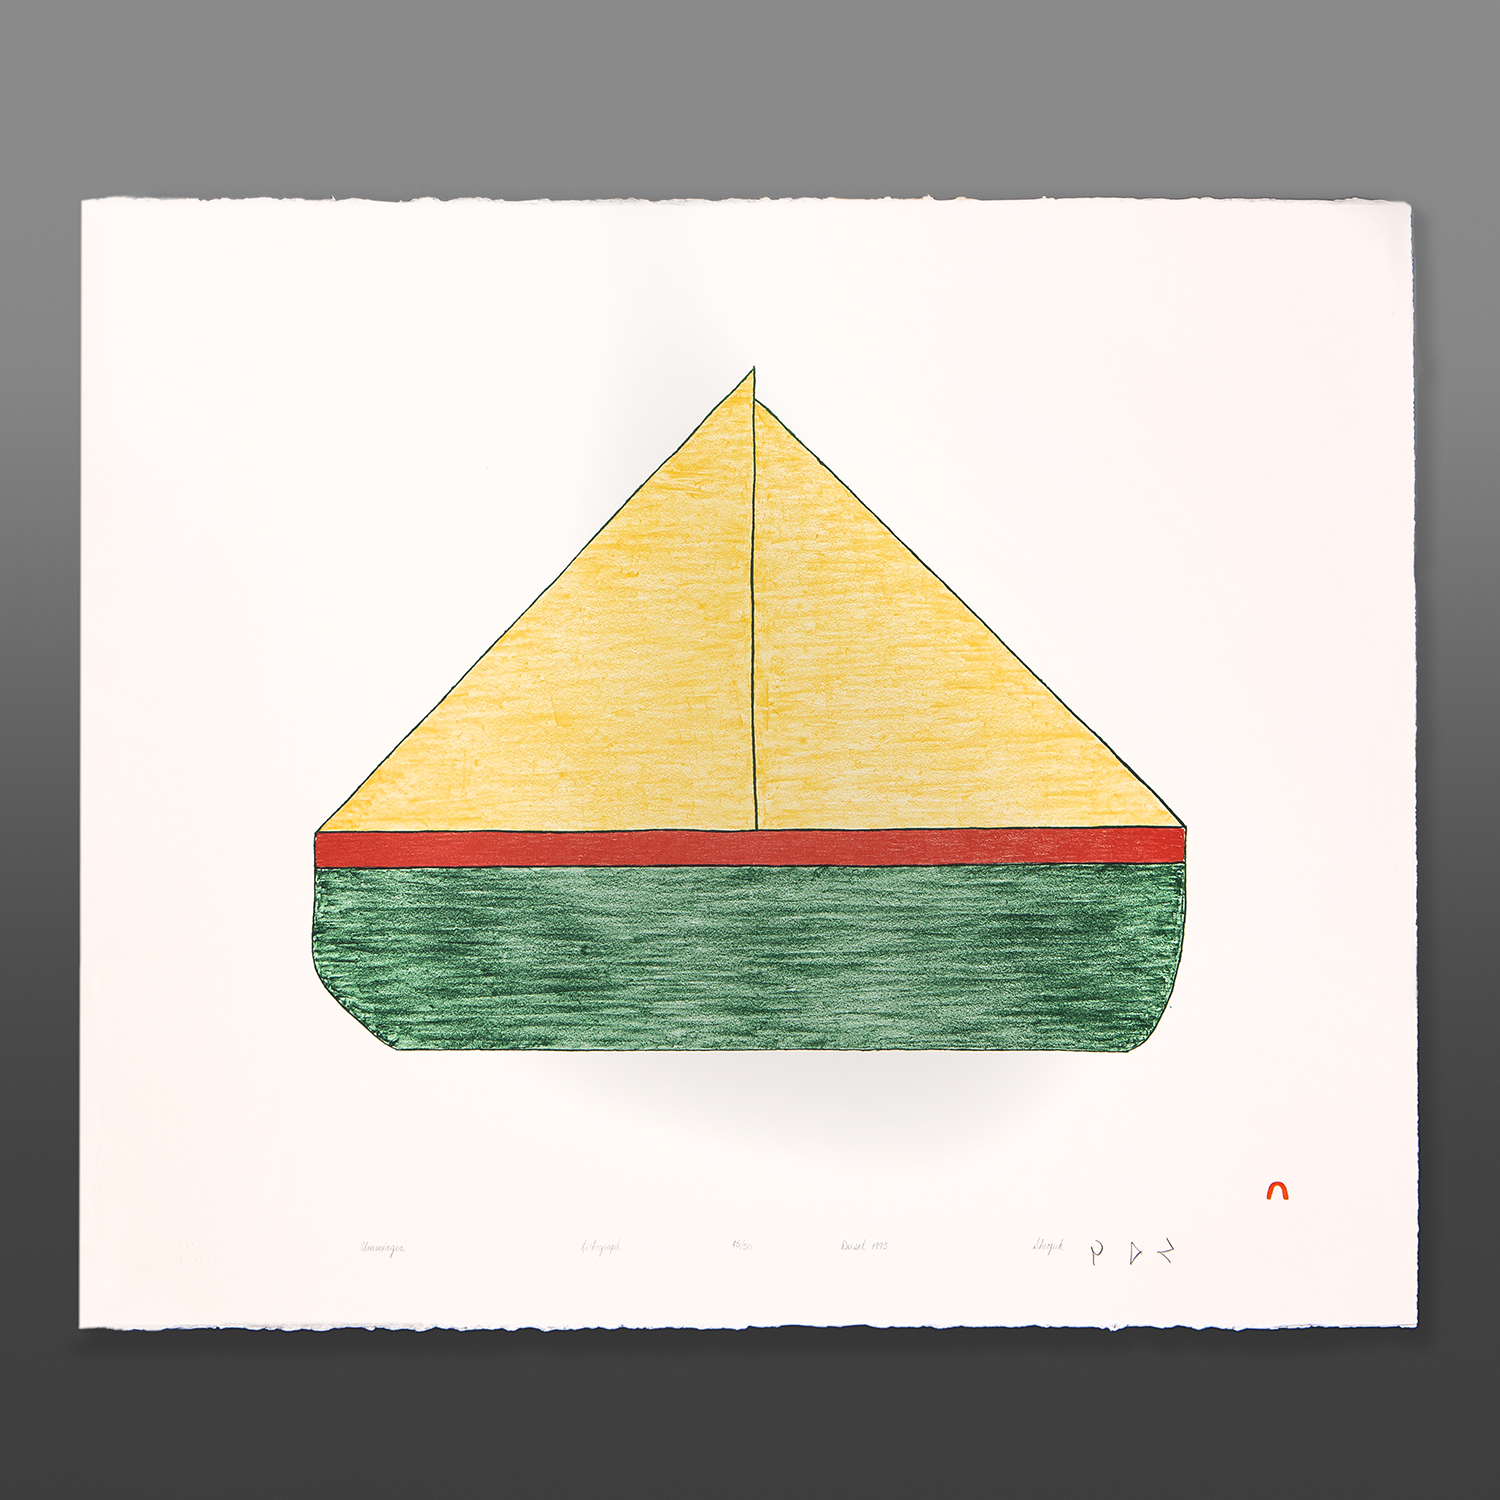 Ummiaqoa Toy Boat Sheojuk Etidloie Inuit Lithograph 27" x 22" $900